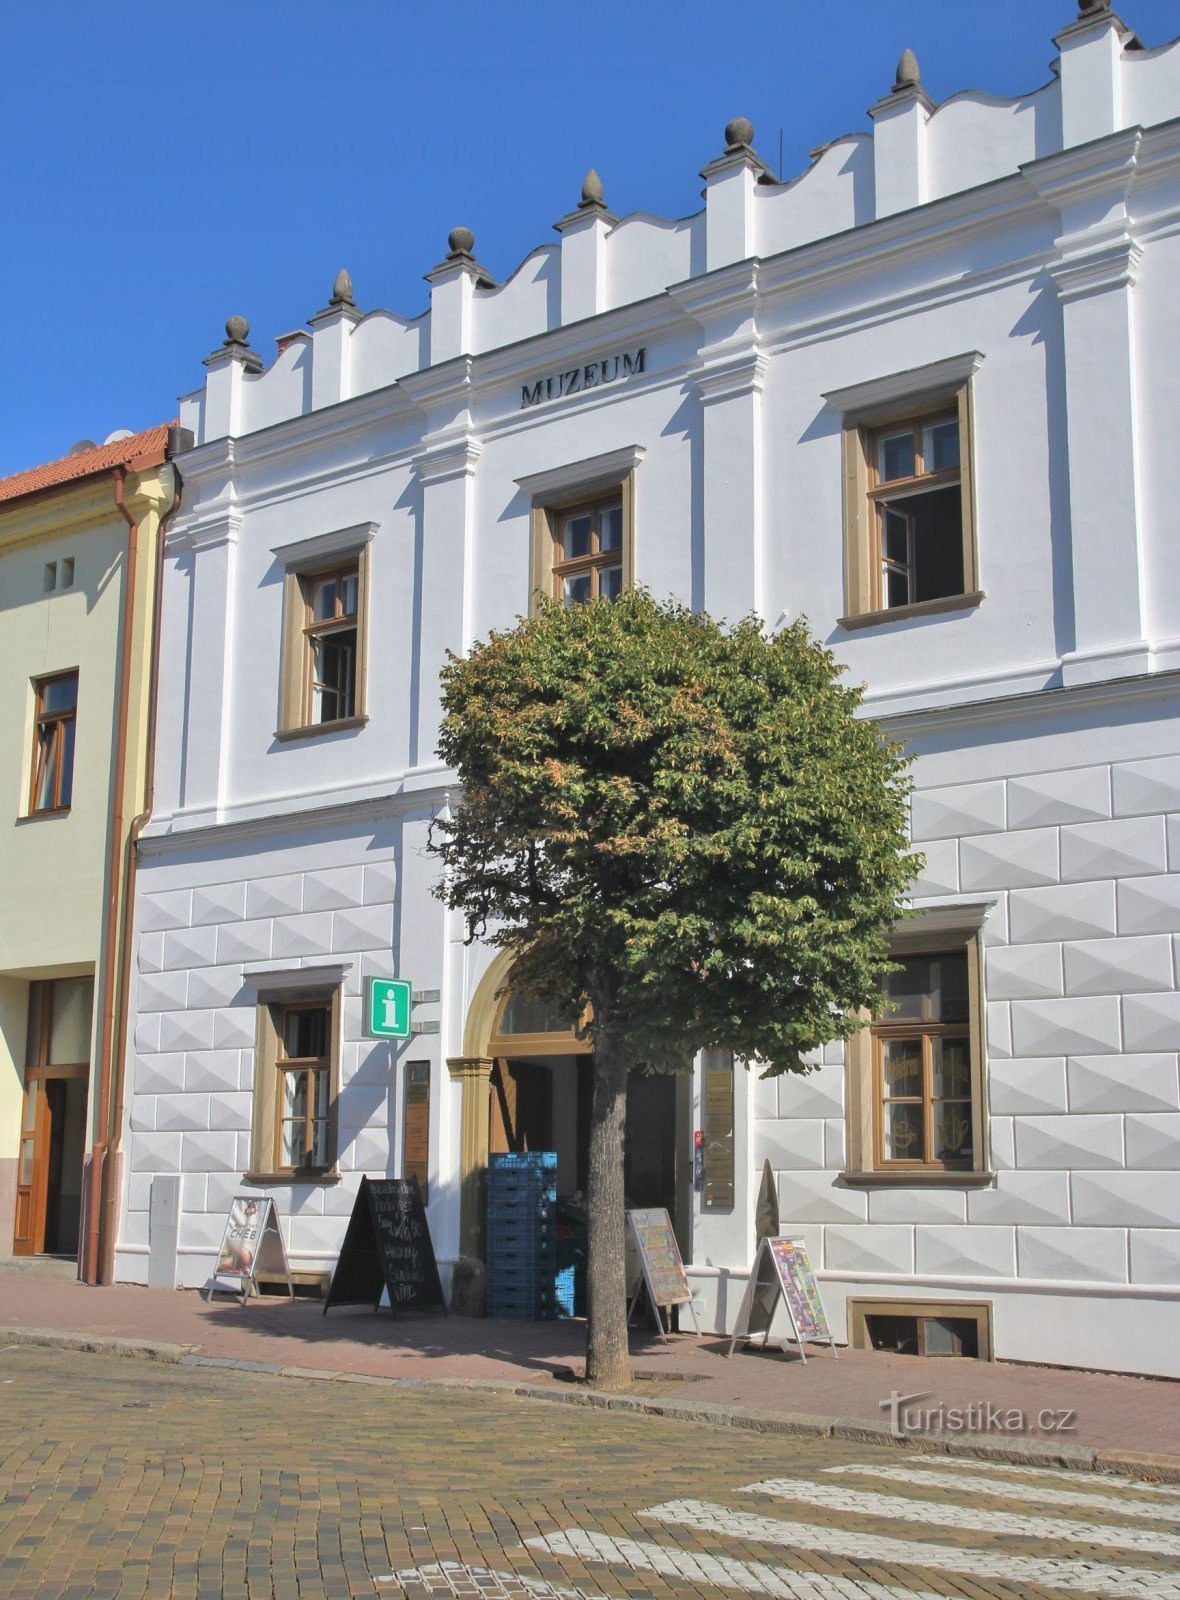 Moravský Krumlov - Municipal Information Center